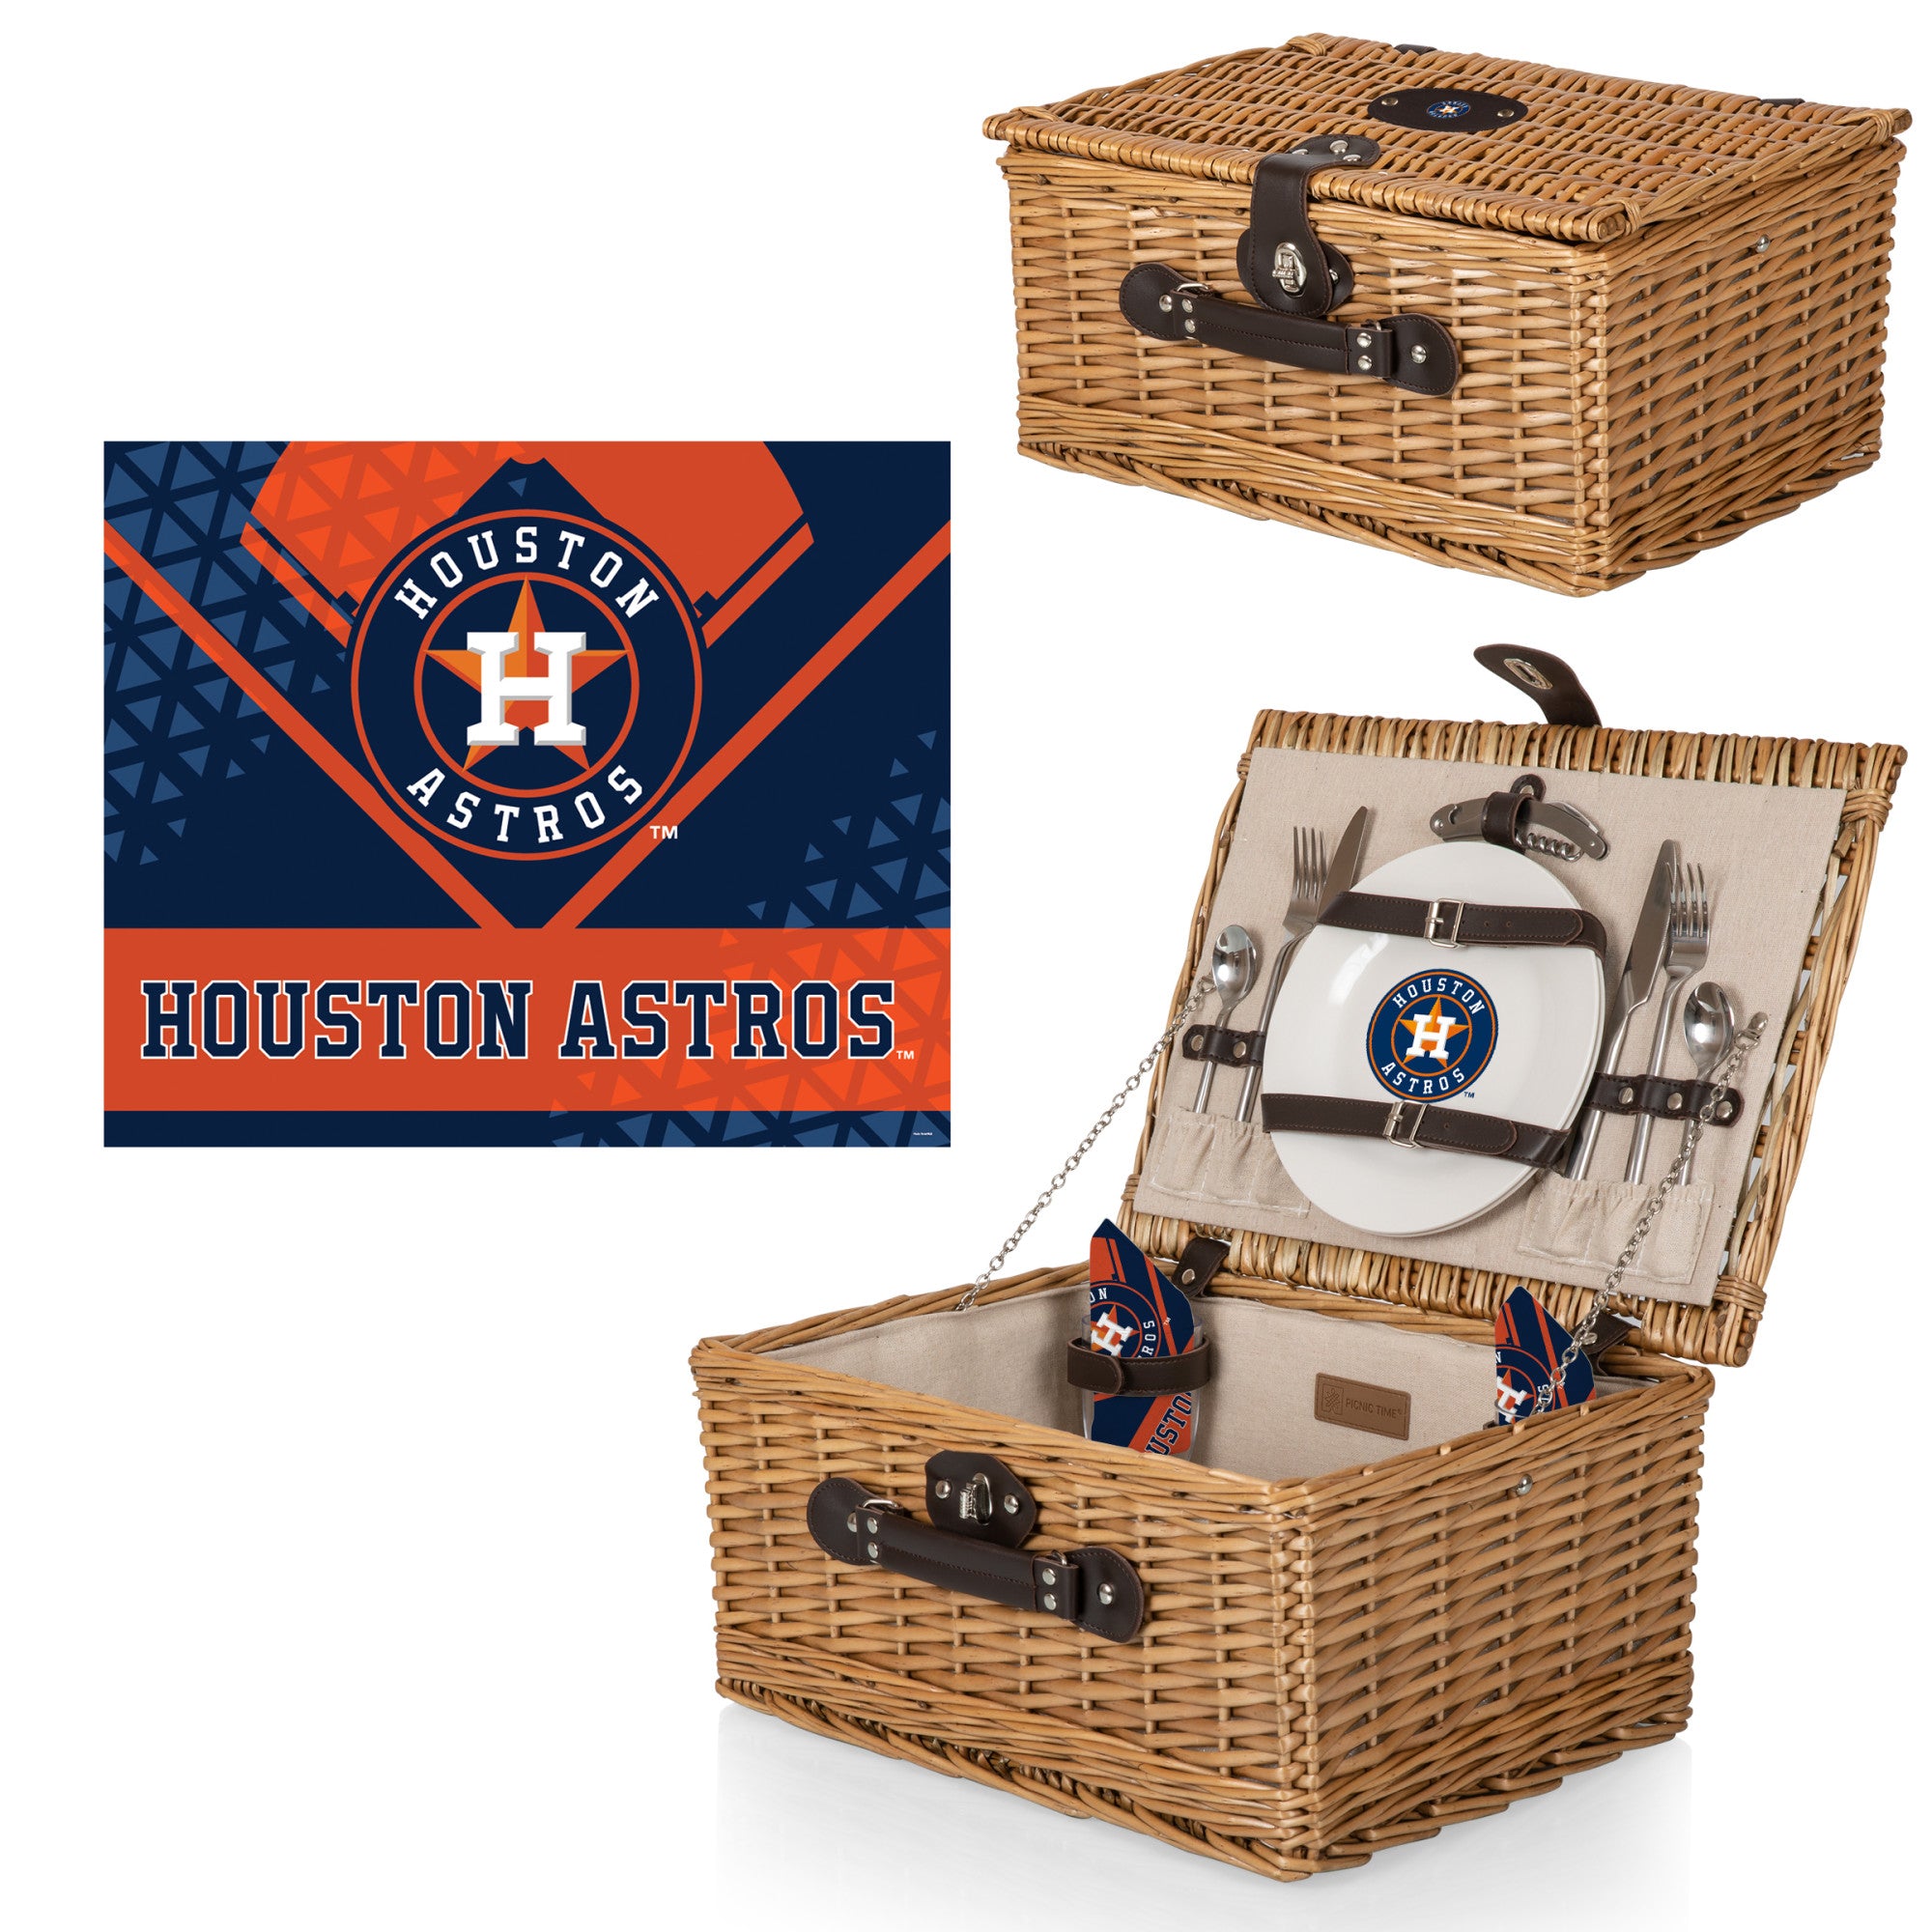 Houston Astros - Classic Picnic Basket